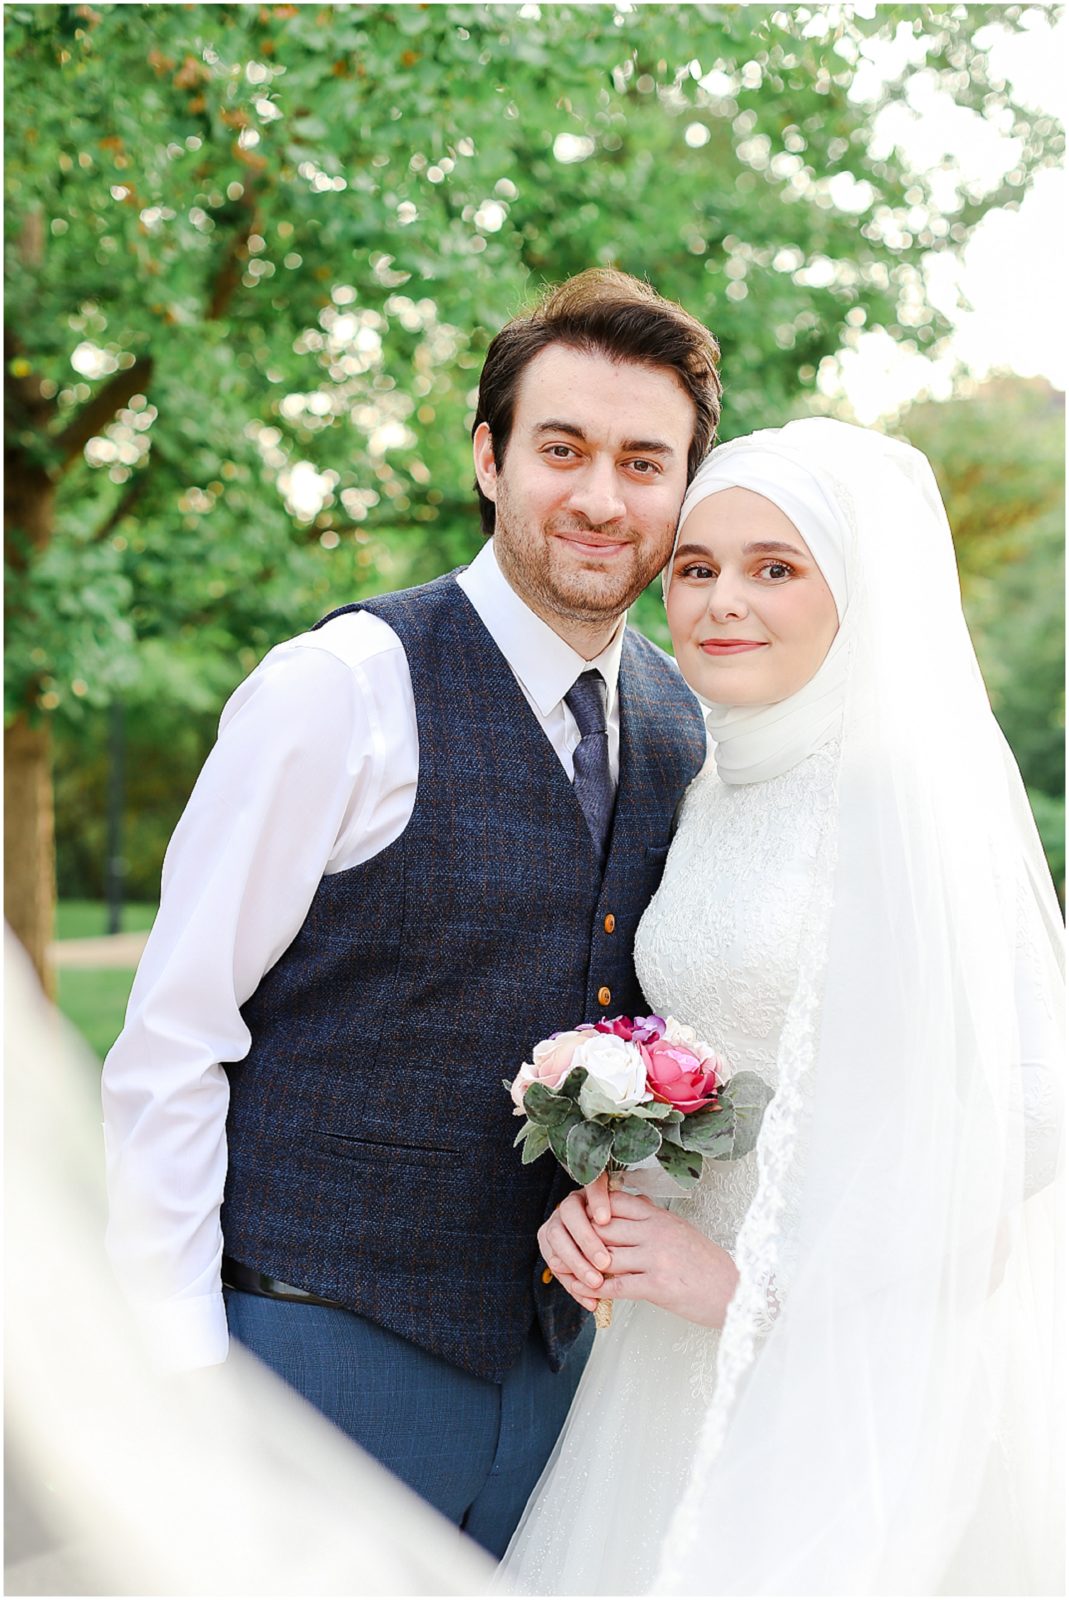 muslim engagement photos - muslim wedding photographer - kansas city - wedding photos 